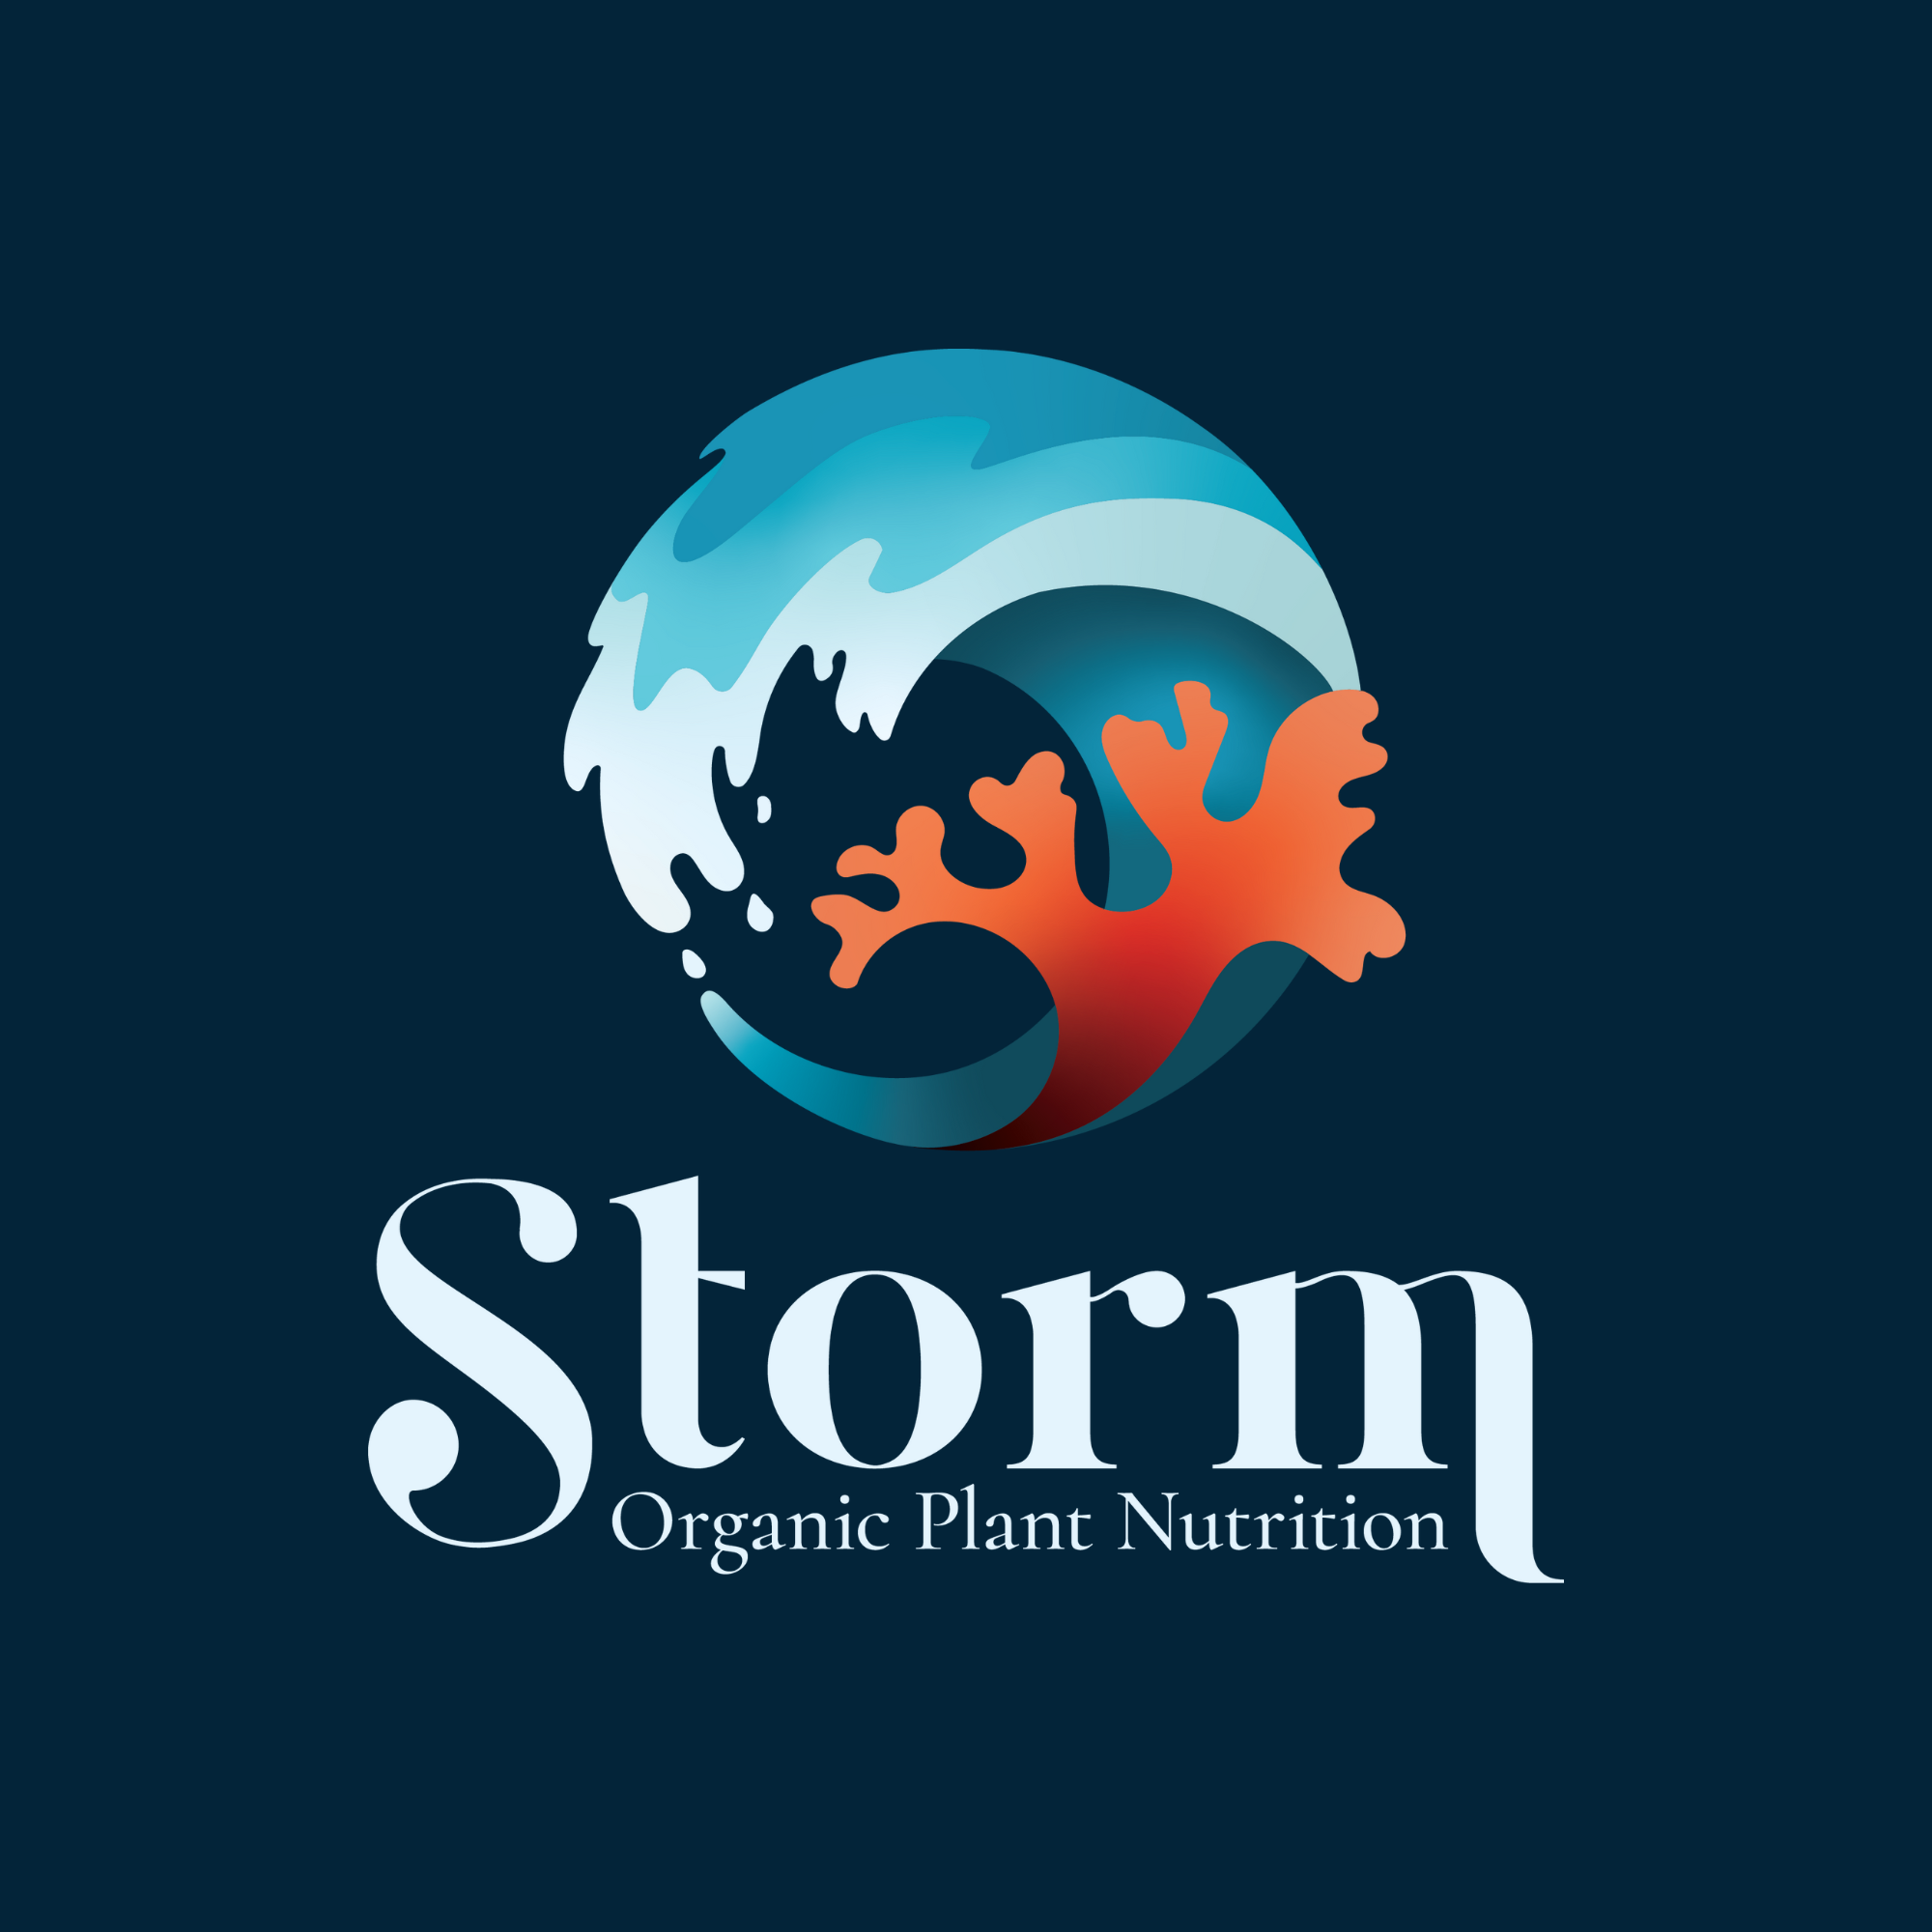 Storm Organic Plant Nutrition